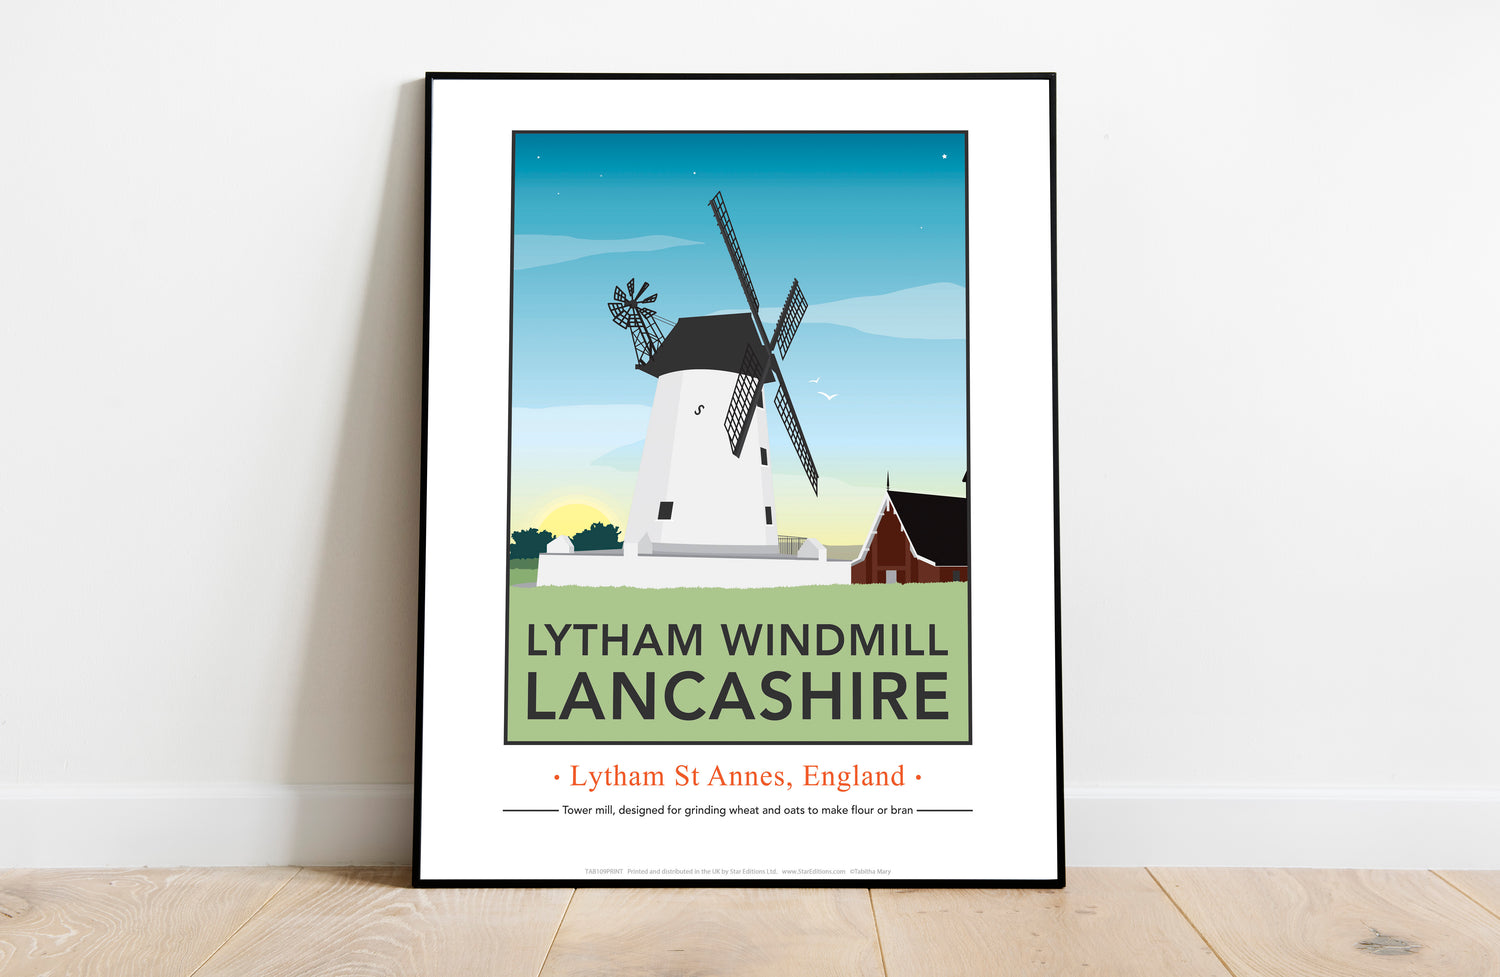 Lytham Windmill, Lytham St Annes, Lancashire - Art Print